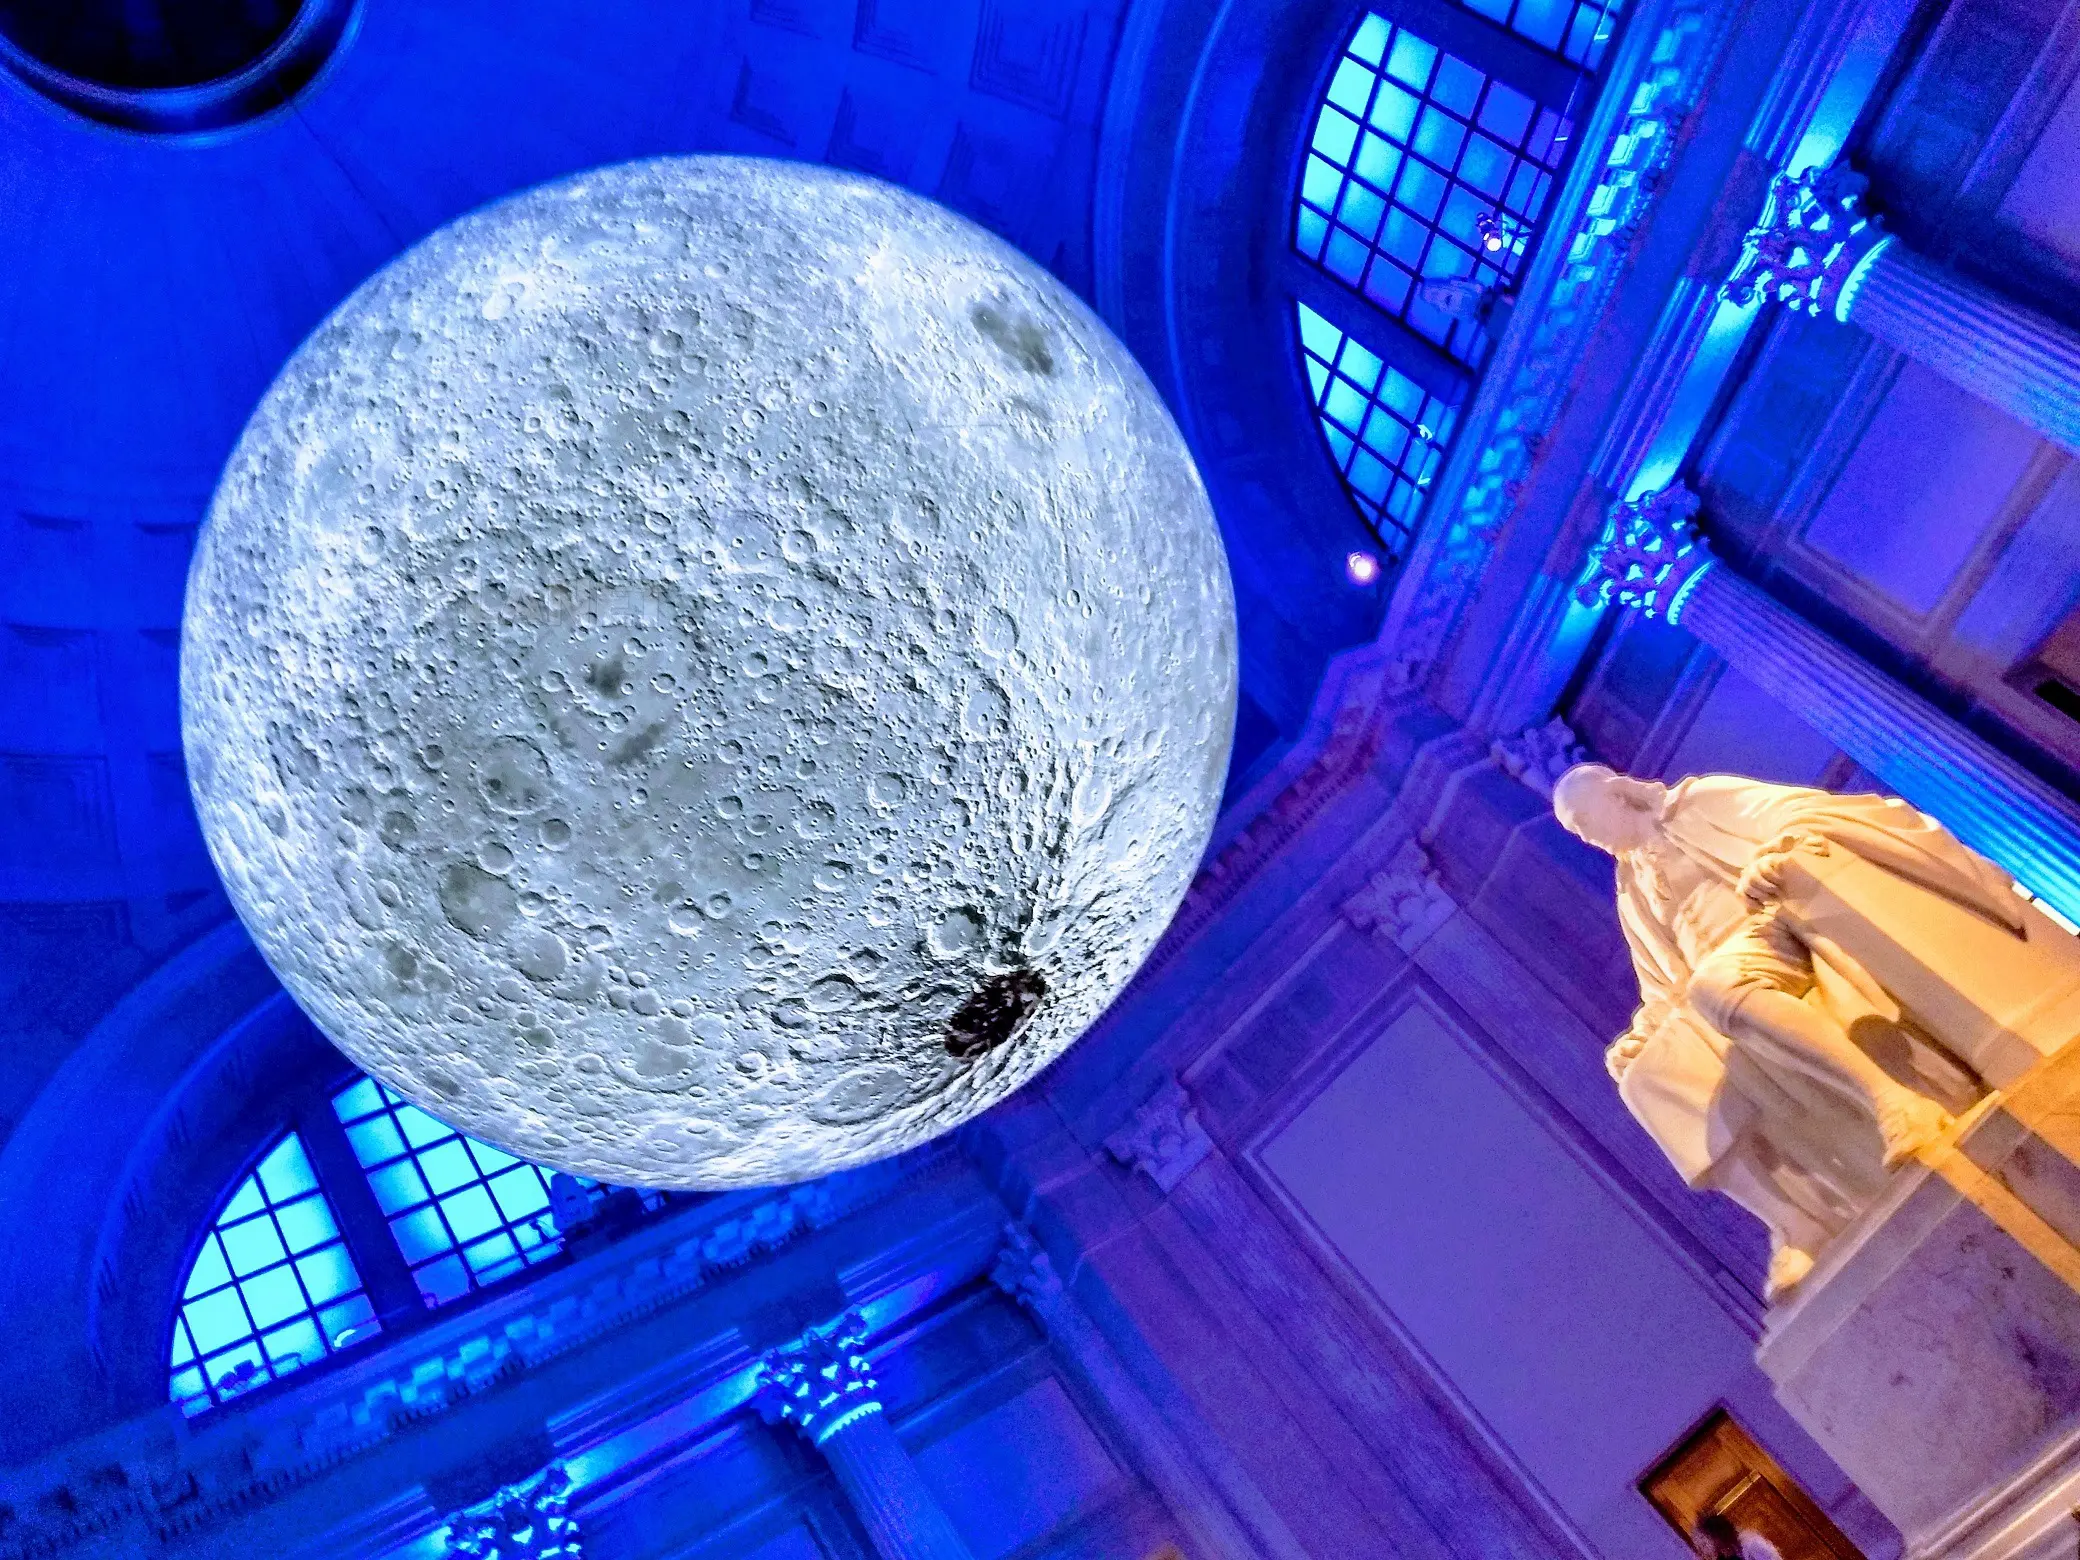 Dekorasi iklan raksasa balon bulan tiup besar Model bulan dengan lampu Led